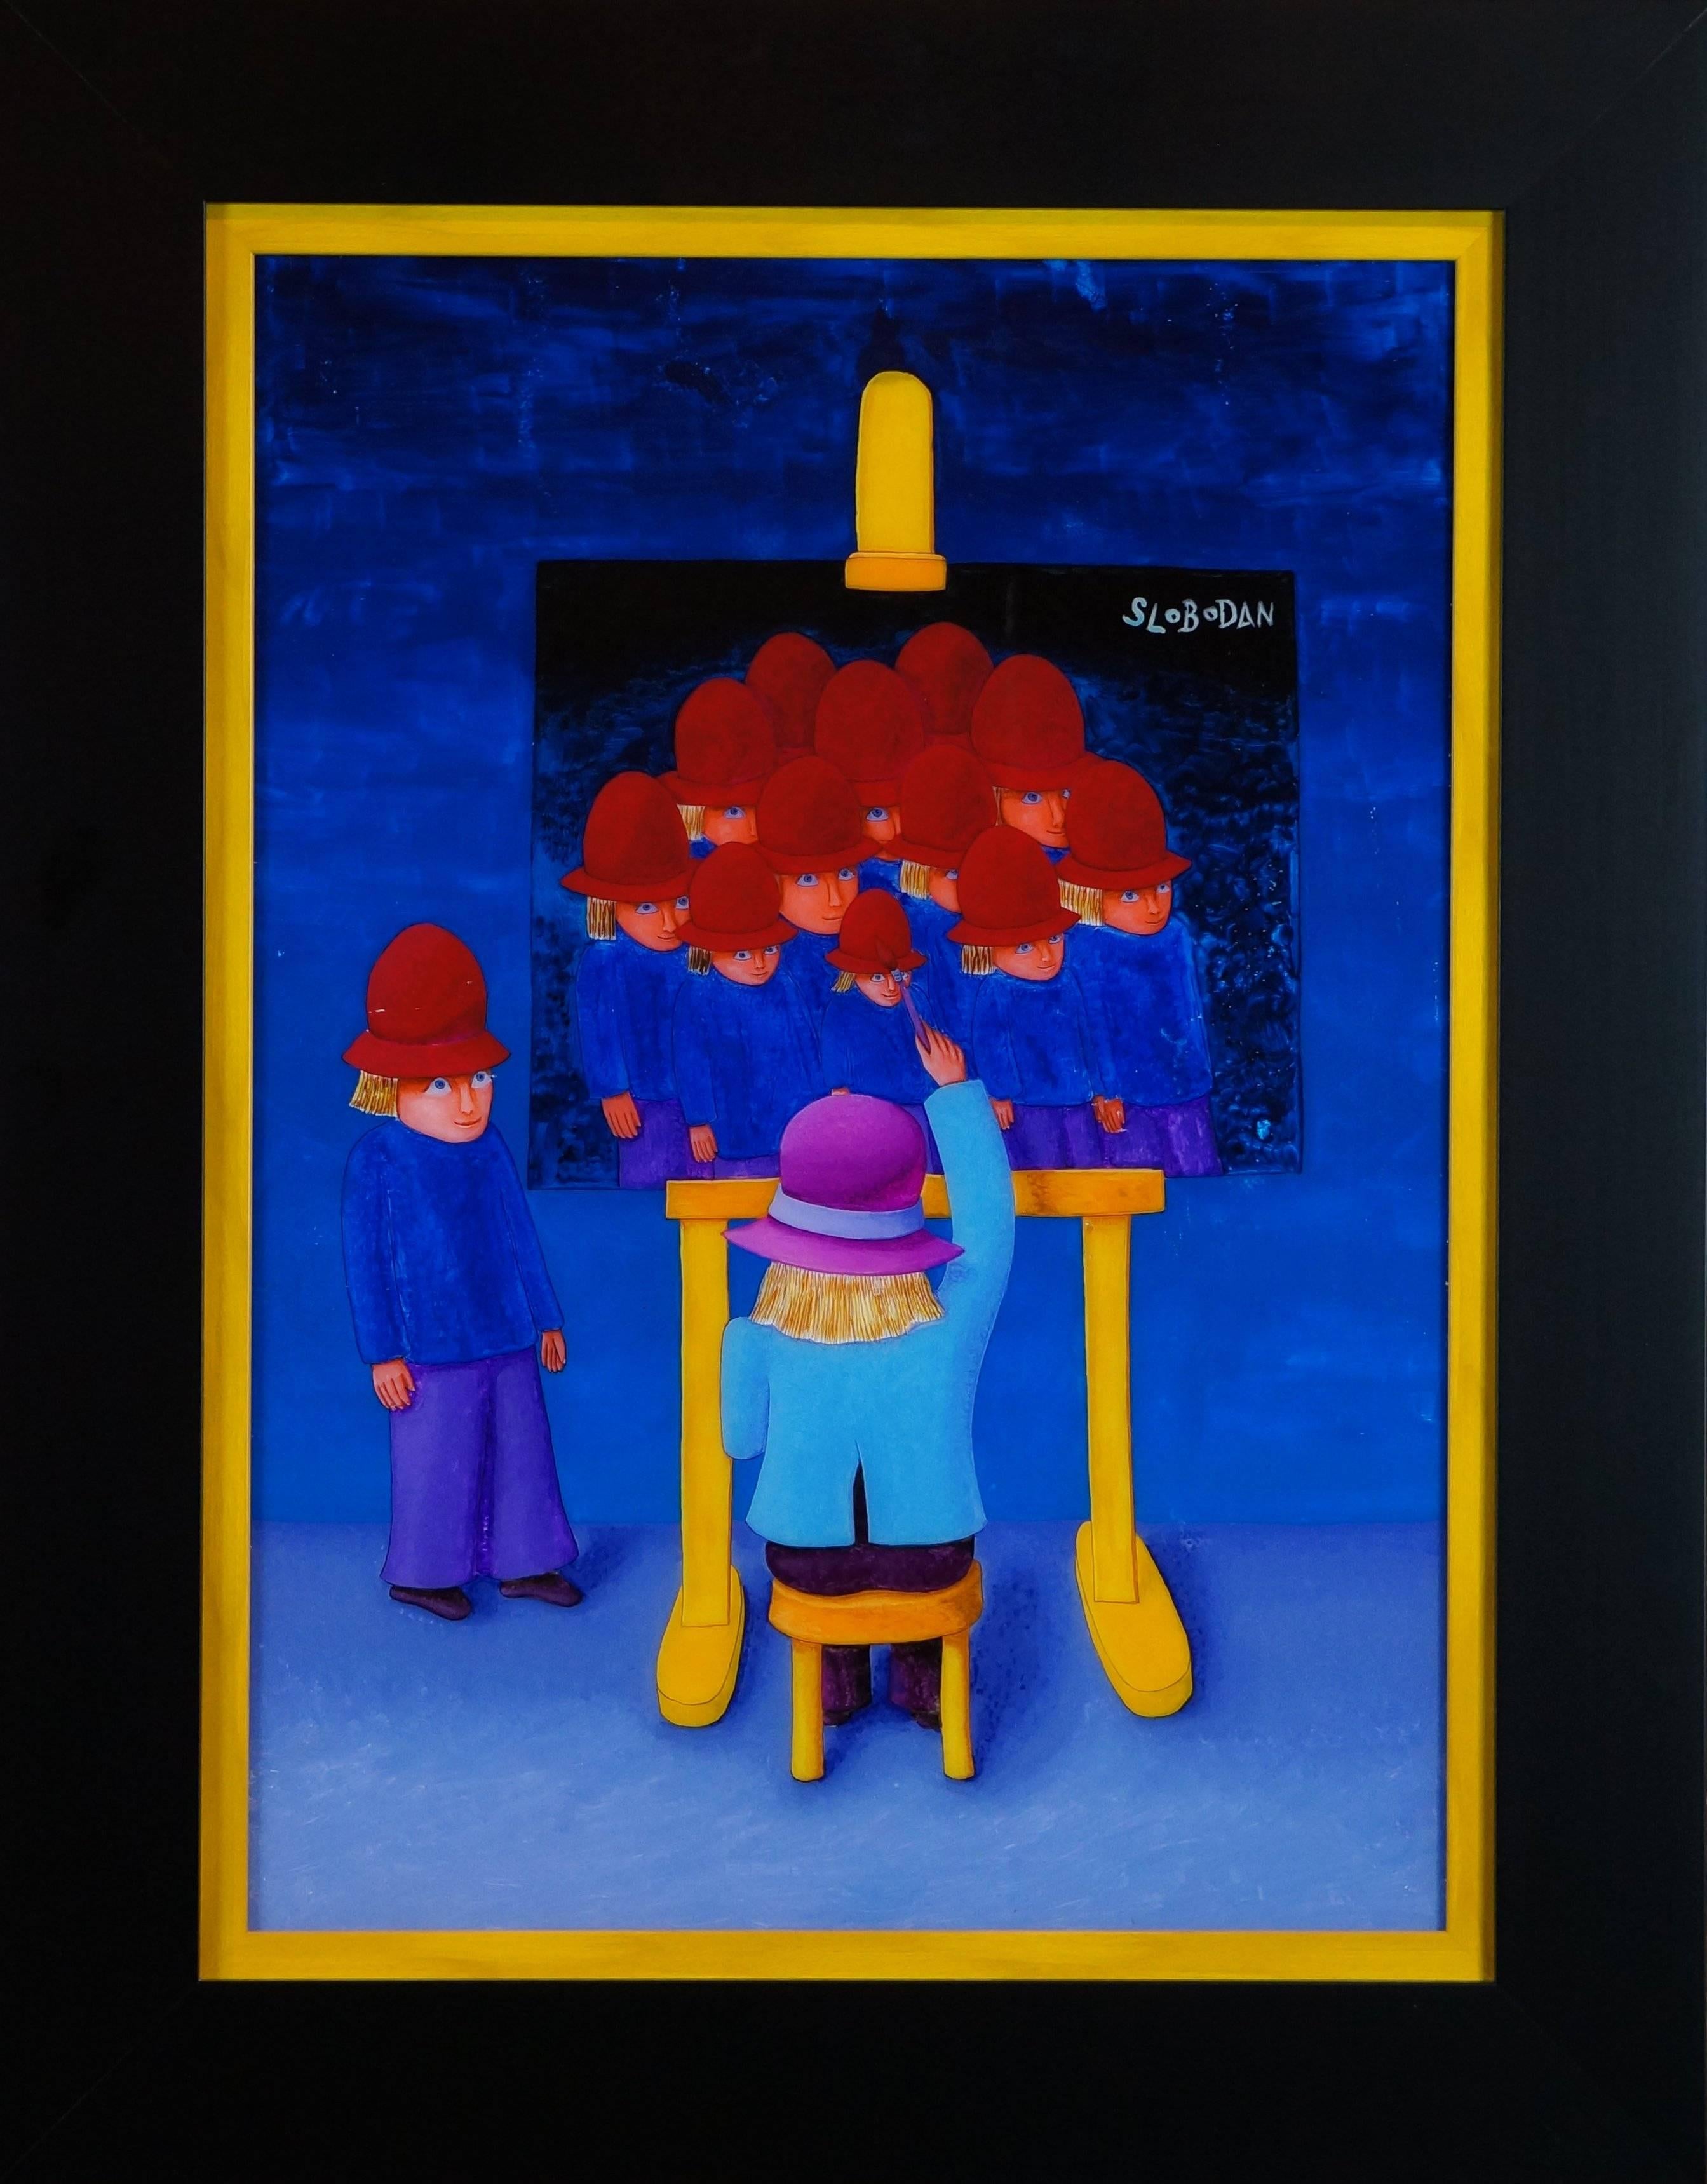 Sblobodan Figurative Painting - Dream Of School - Oil on canvas, cm. 52x76, framed